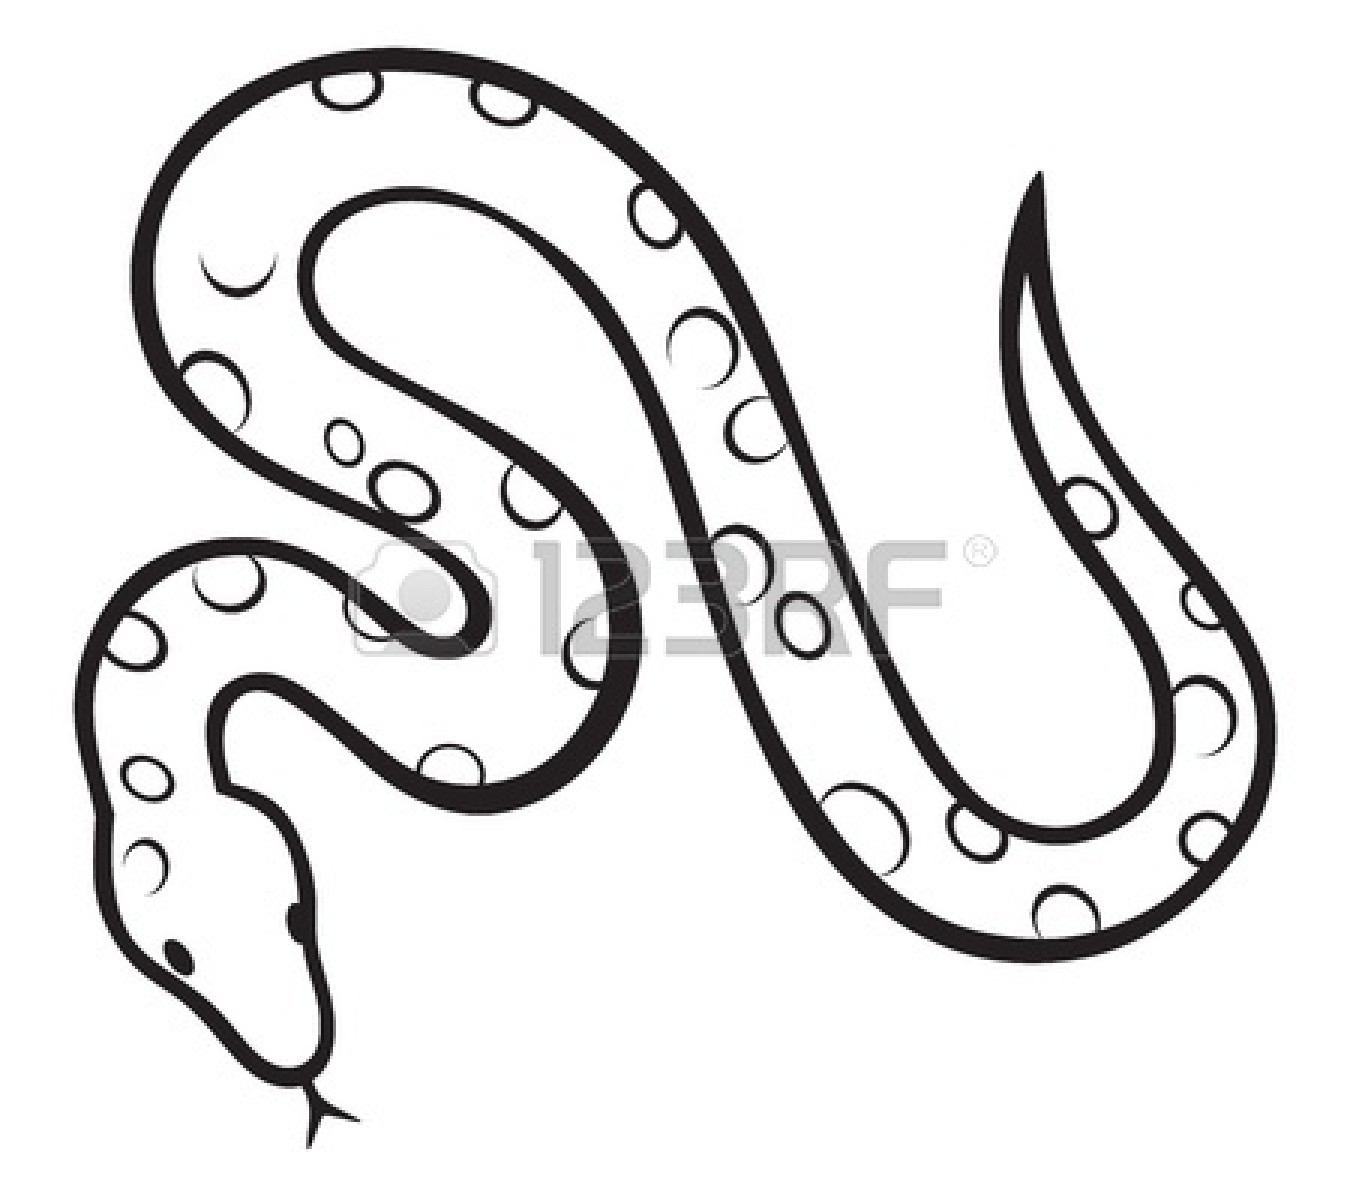 Garter Snake clipart #1, Download drawings